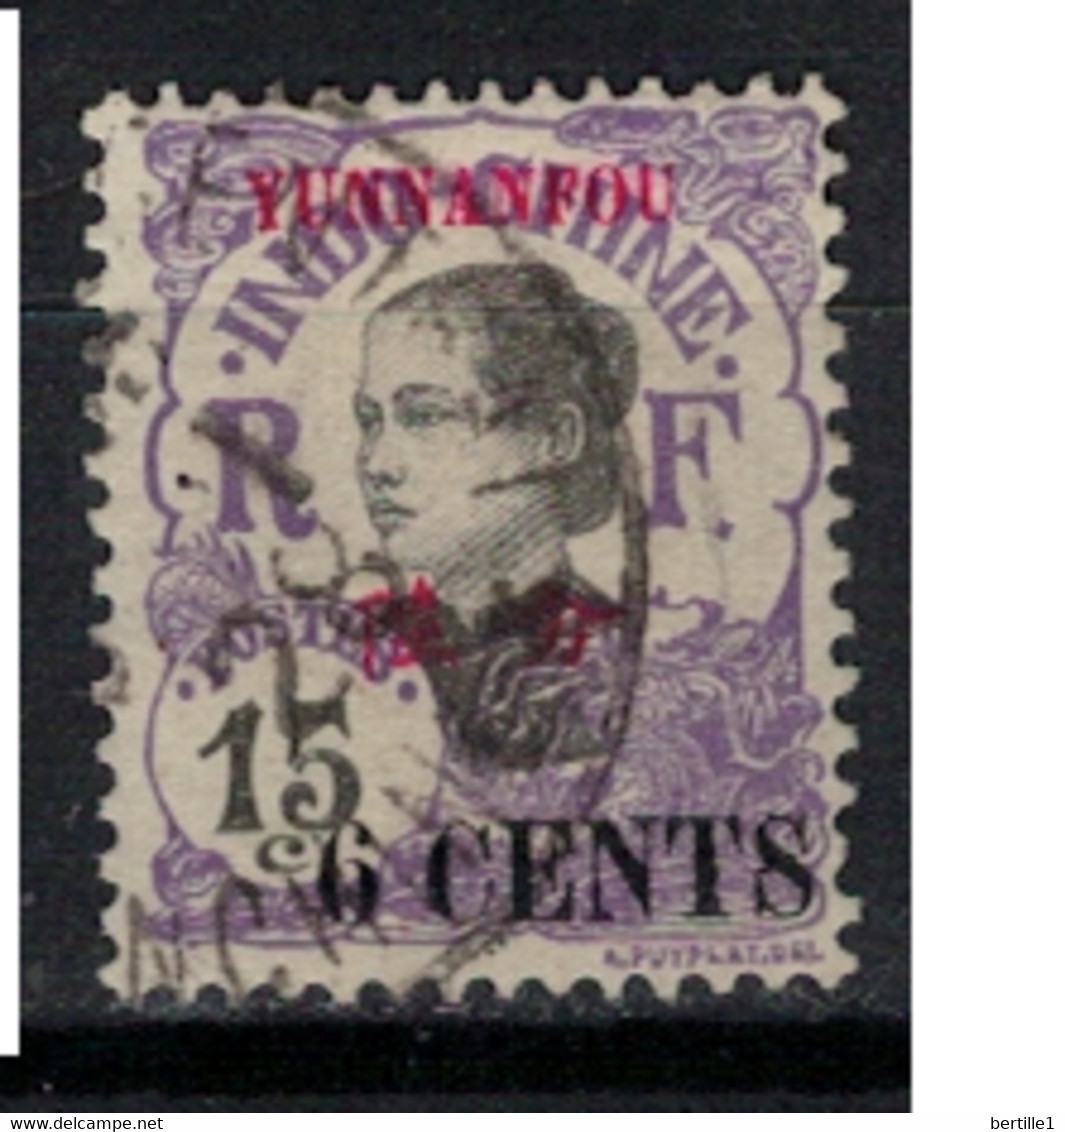 YUNNANFOU       N°     YVERT  55  OBLITERE       ( Ob  10/19) - Used Stamps